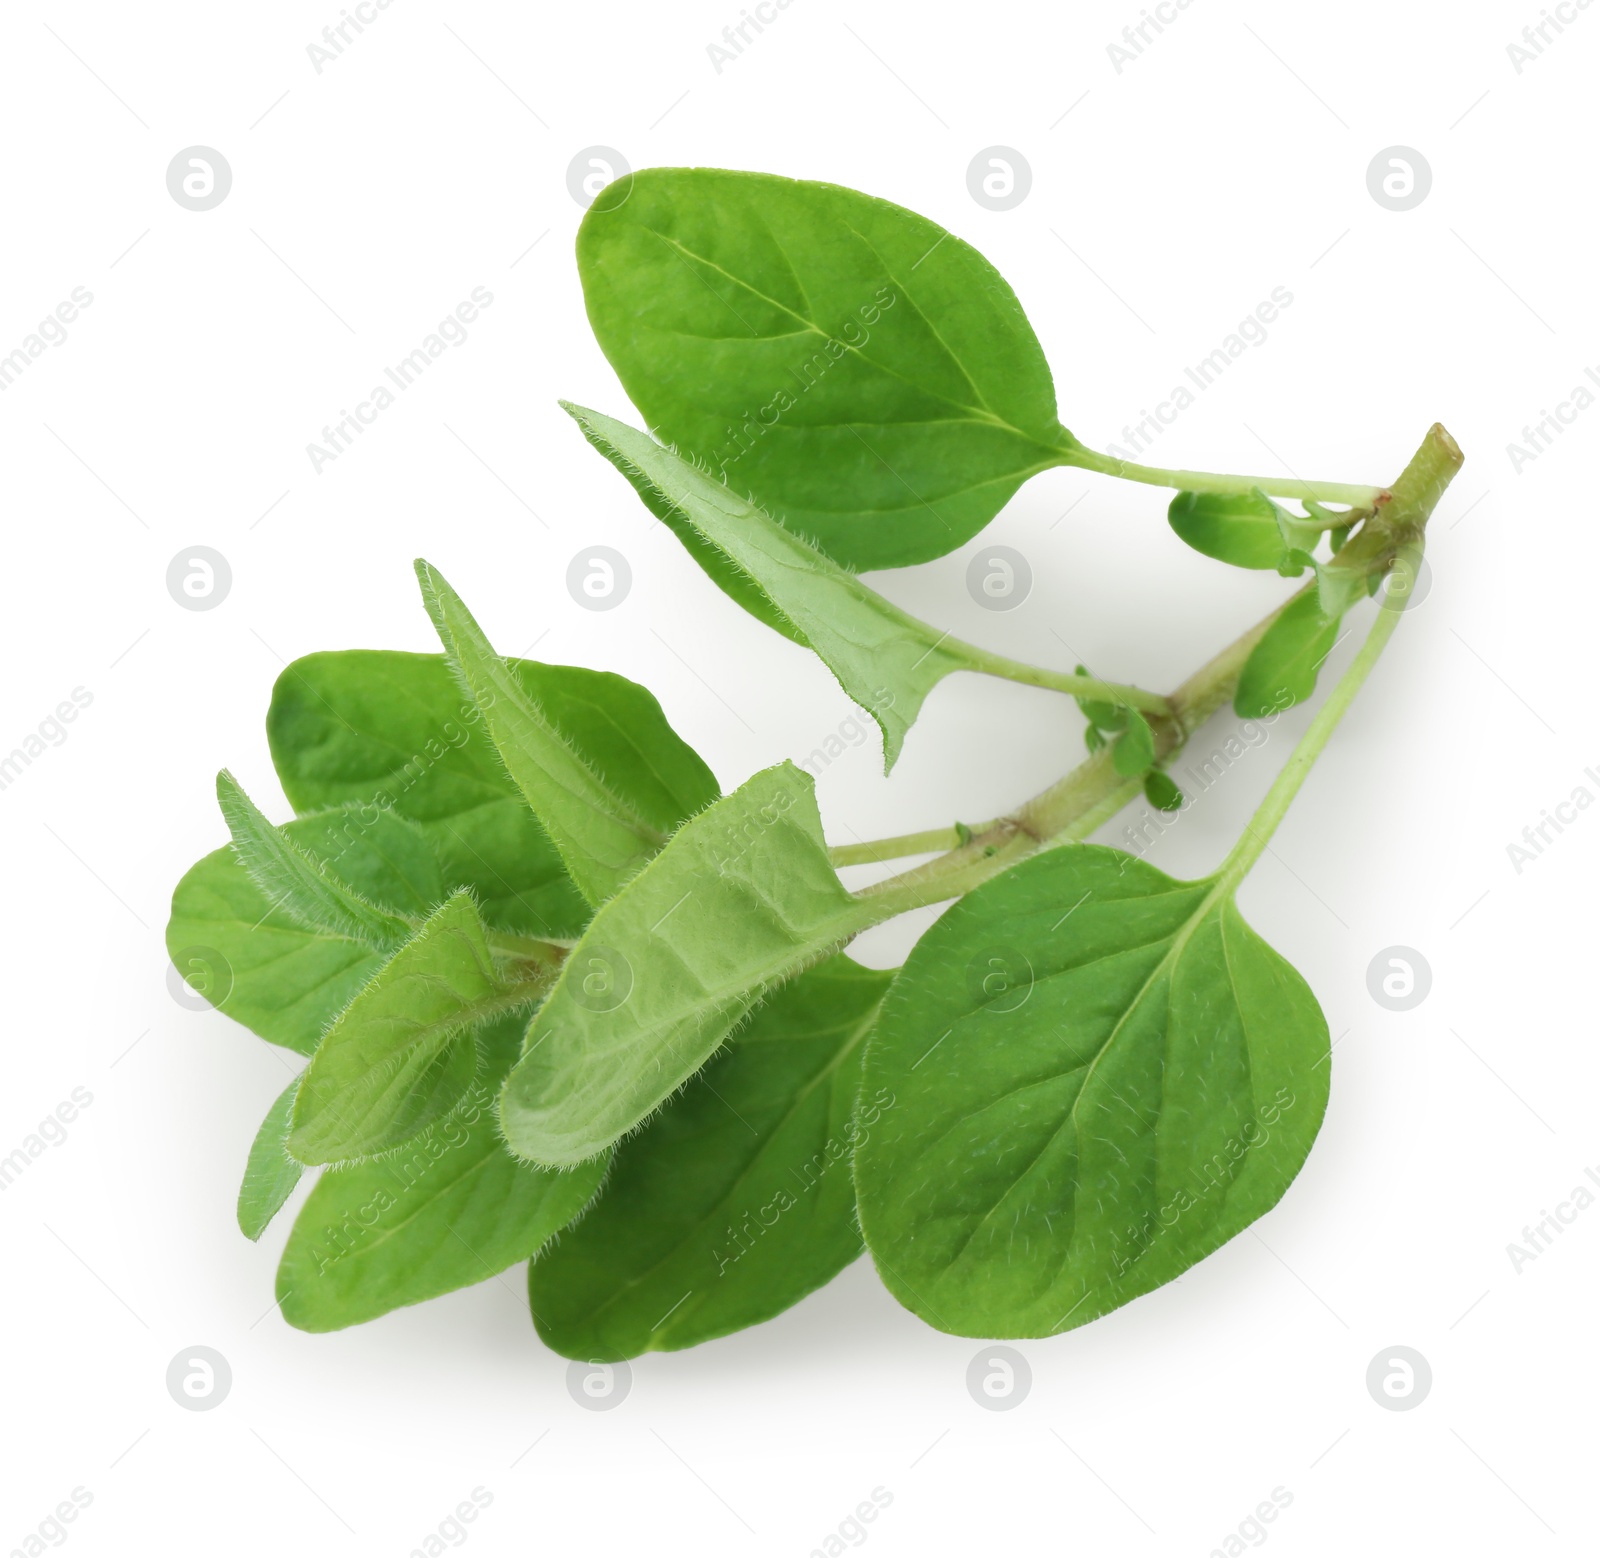 Photo of Sprig of fresh green oregano isolated on white